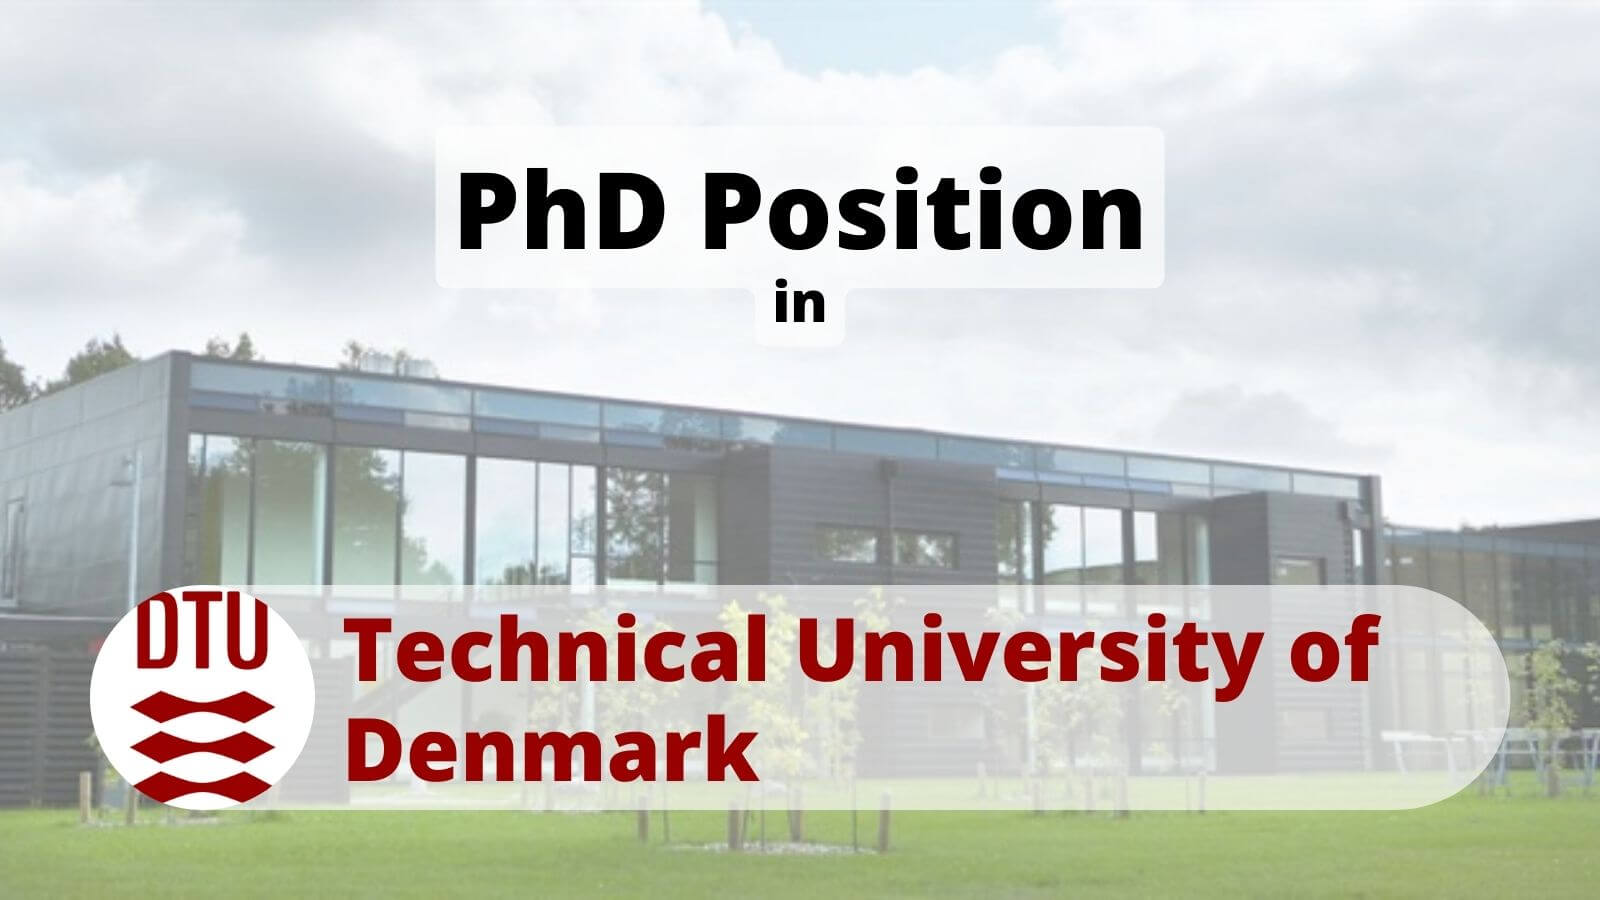 PhD Position DTU Technical University of Denmark